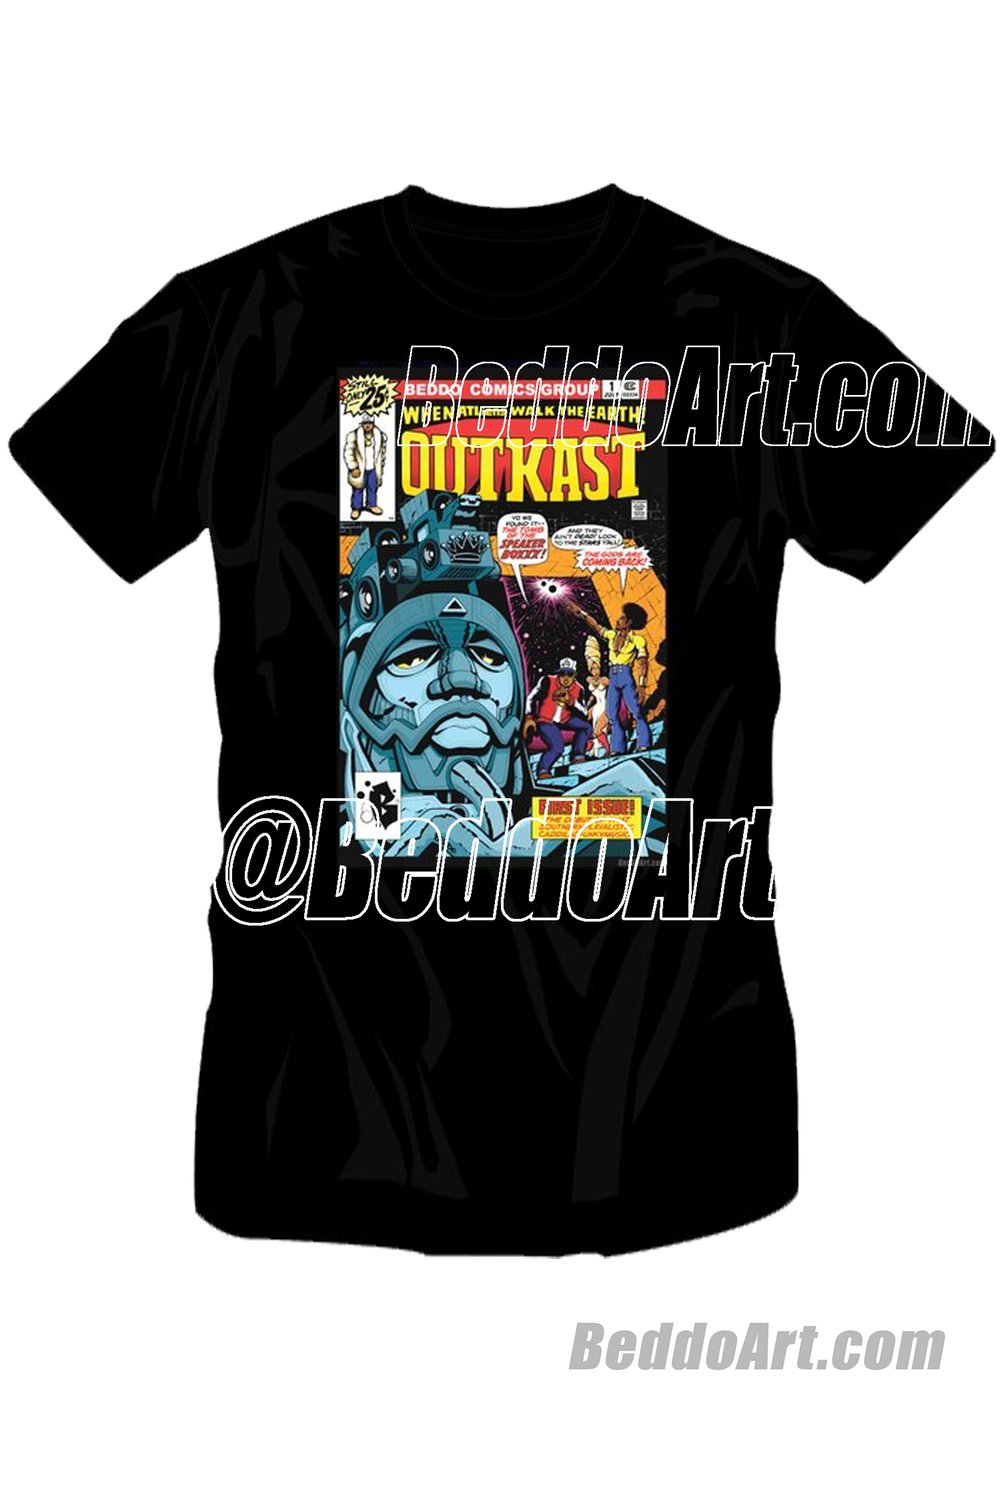 Outkast - The Gods #1 T-Shirt 